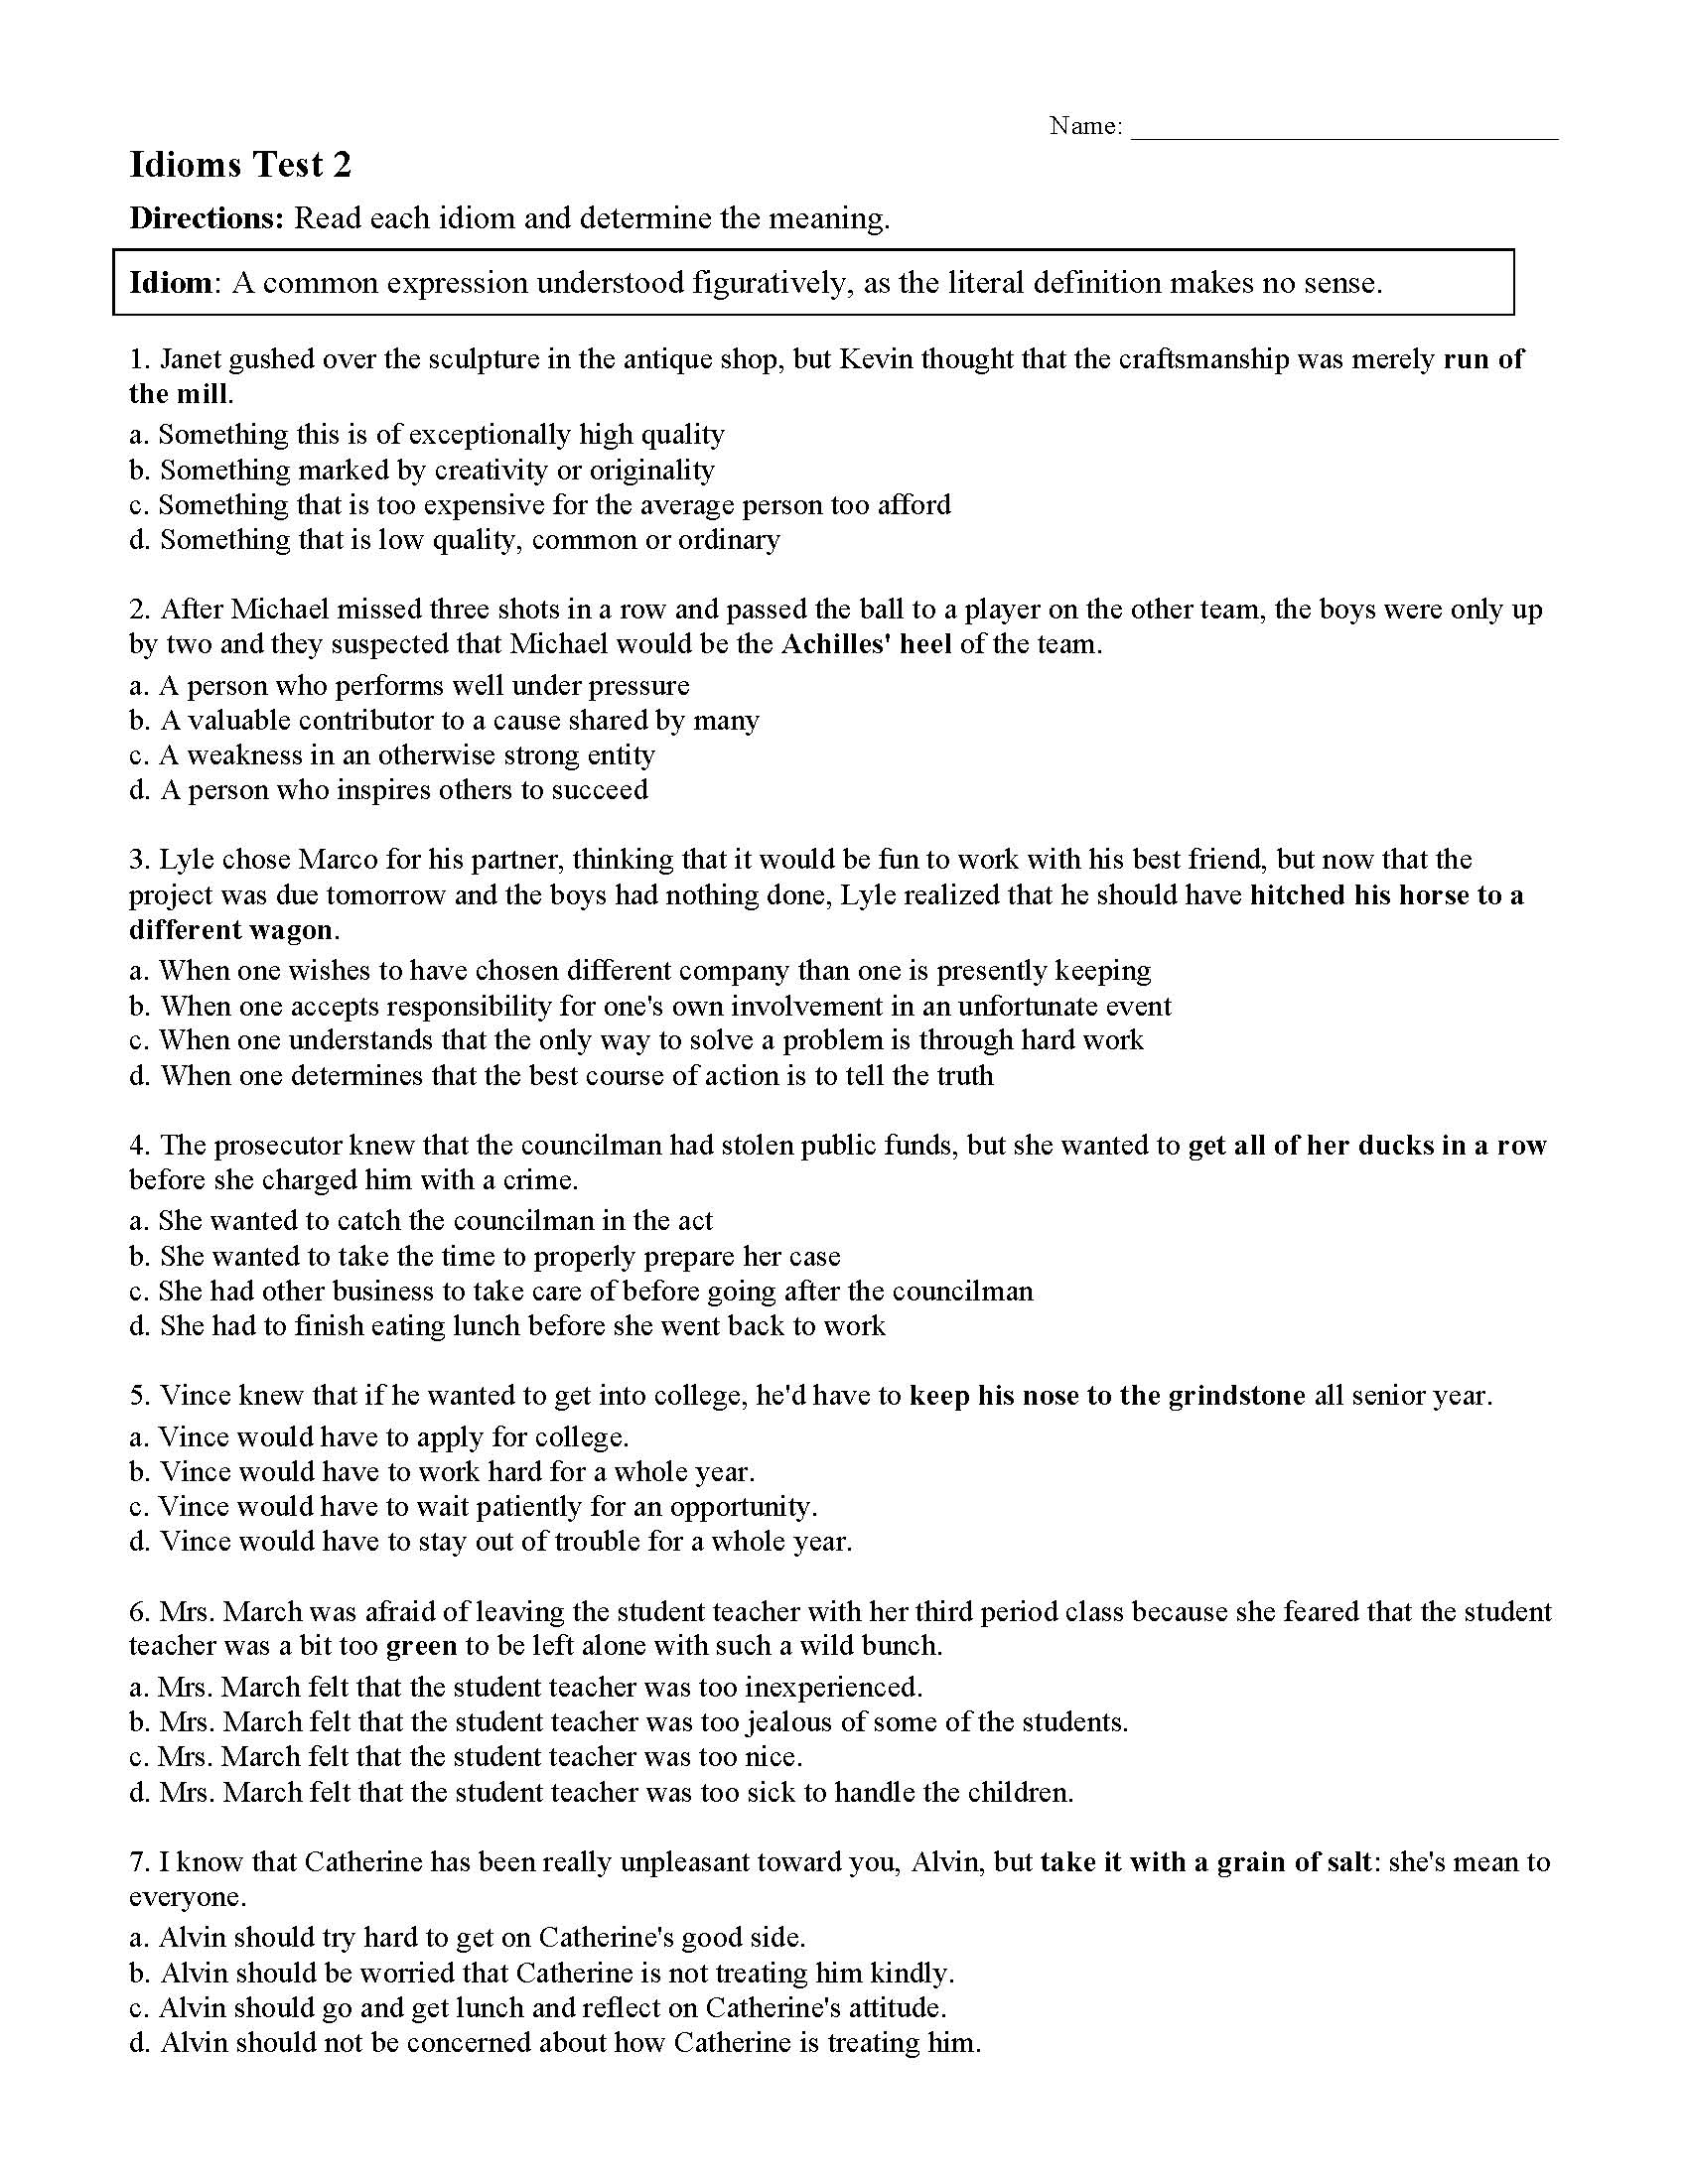 basic-skills-worksheet-identifying-idioms-multiple-choice-worksheet-2nd-grade